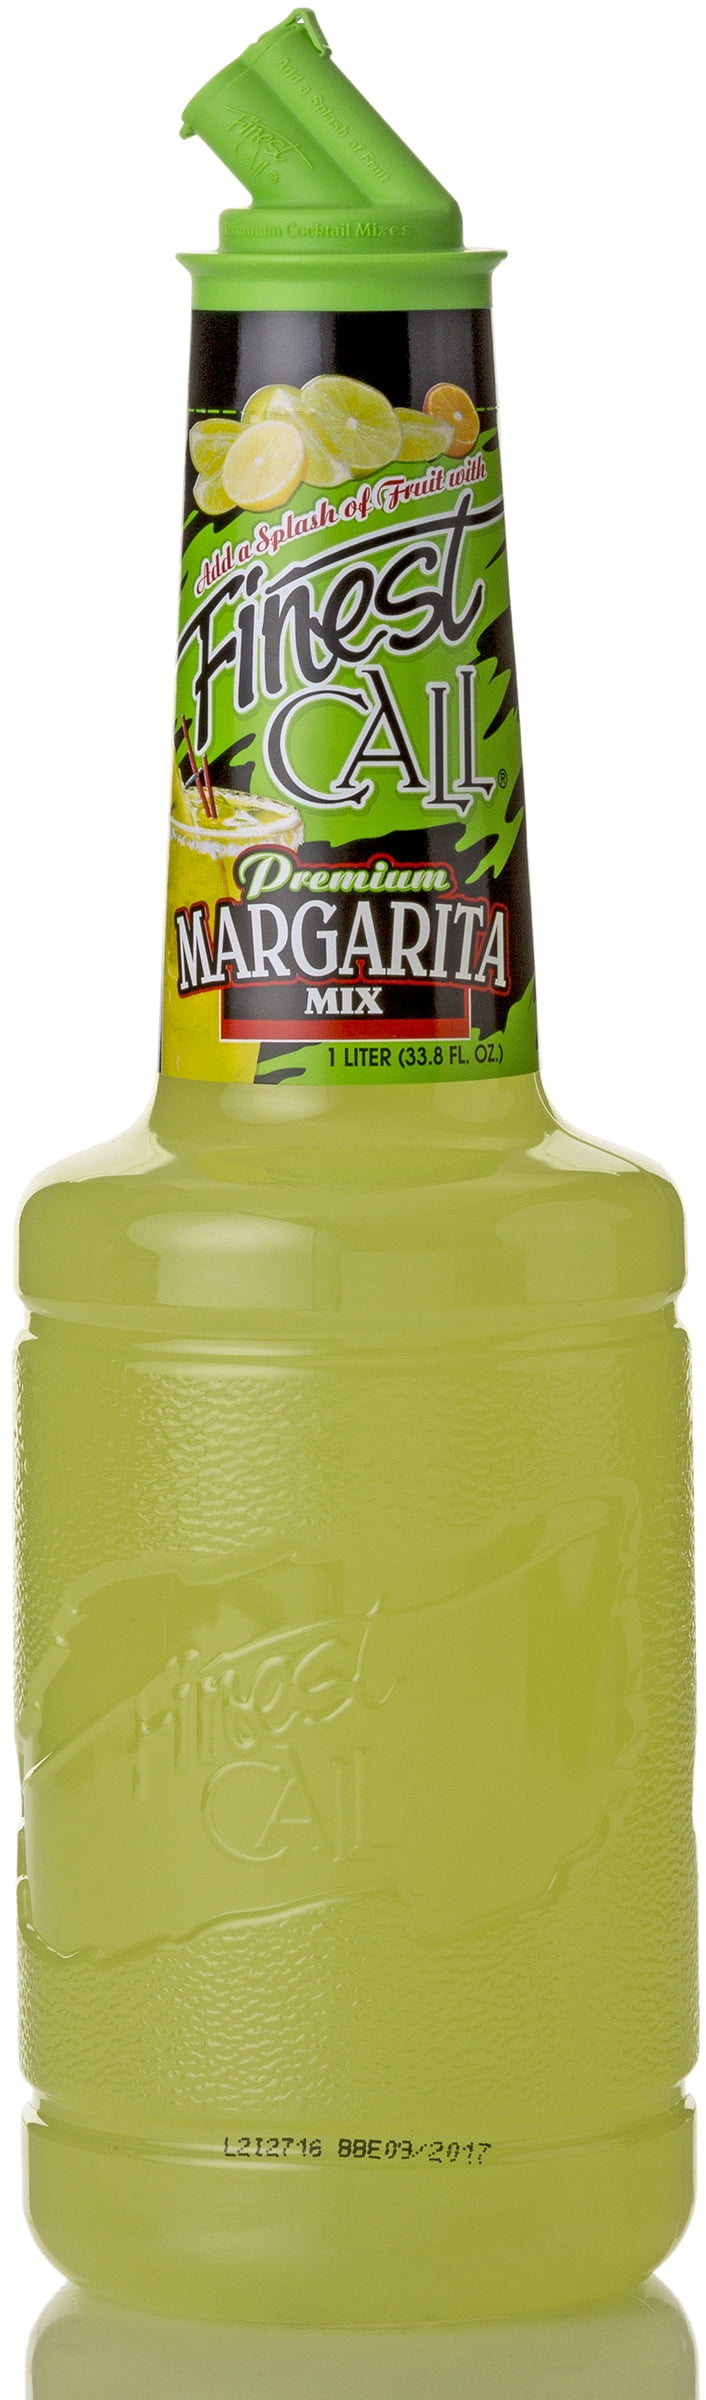 virgin margarita mix walmart